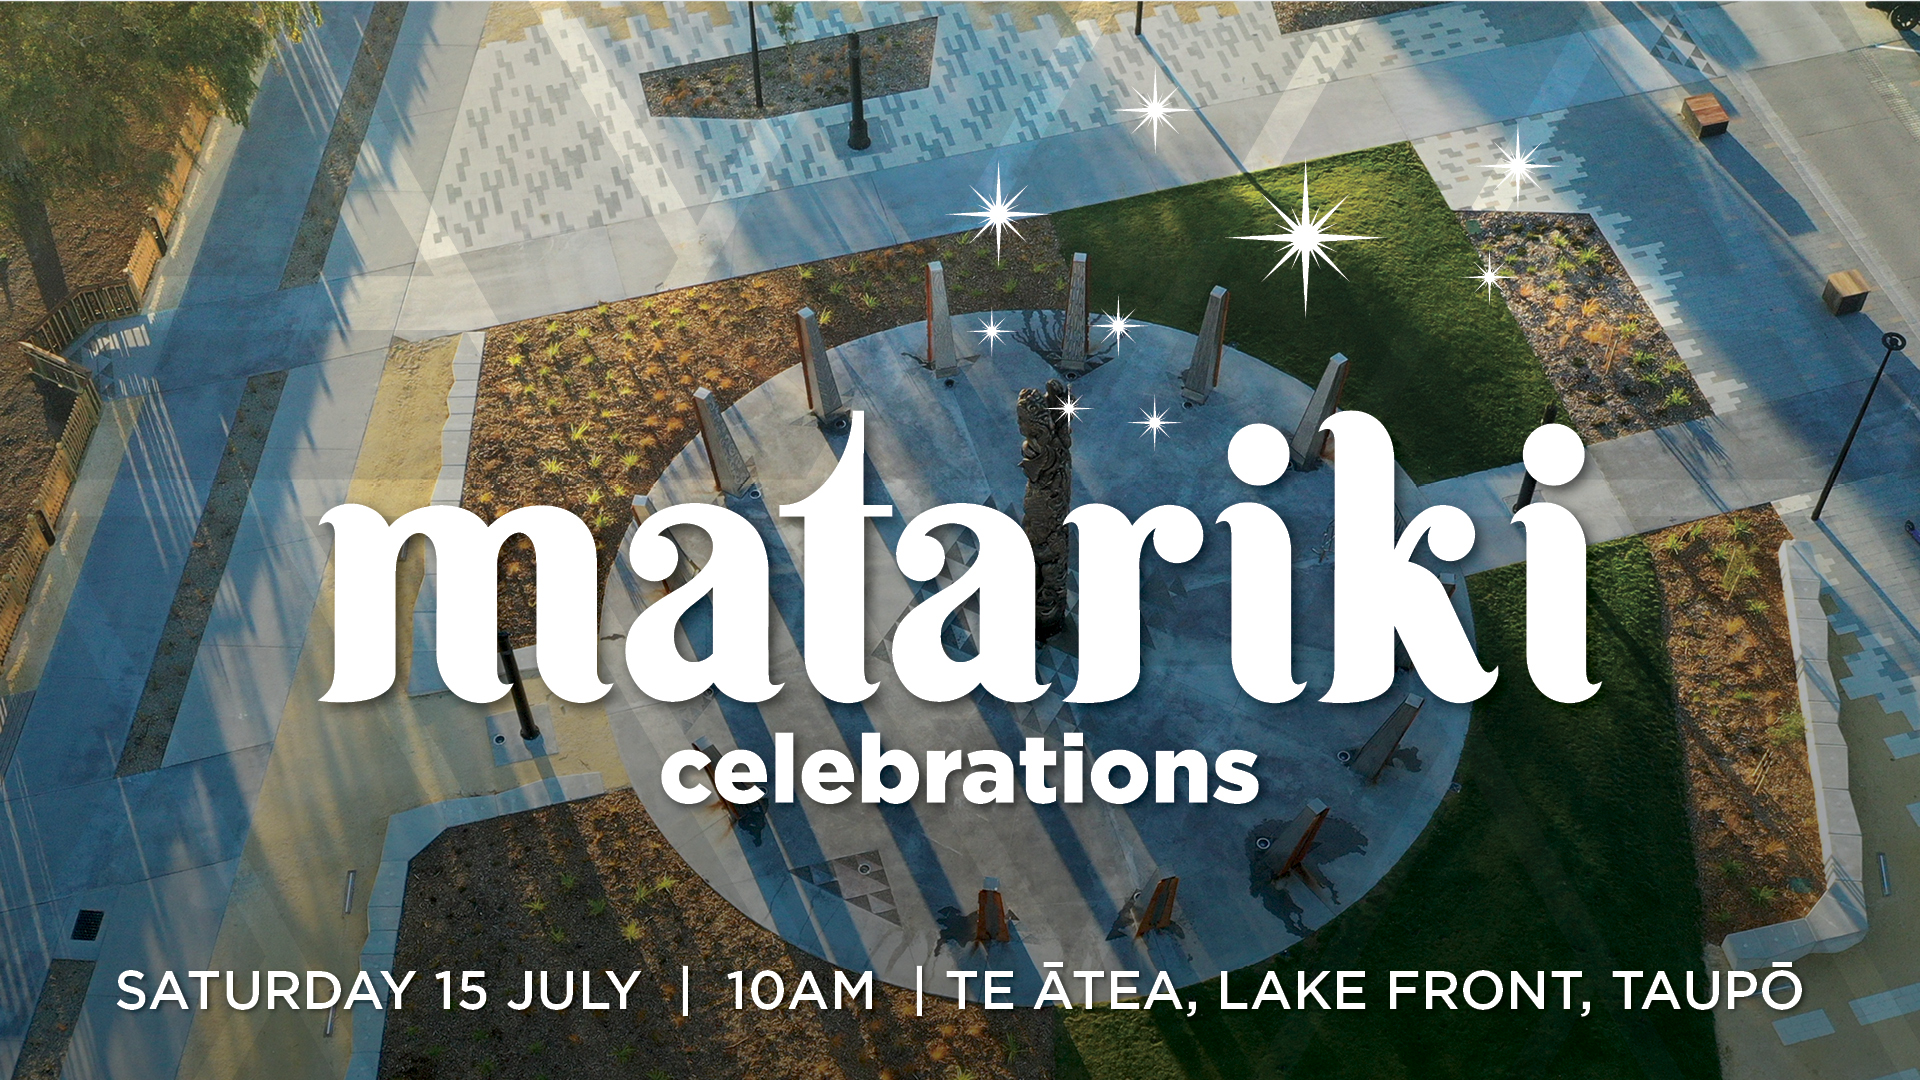 Matarki celebrations in Taupō thumbnail image